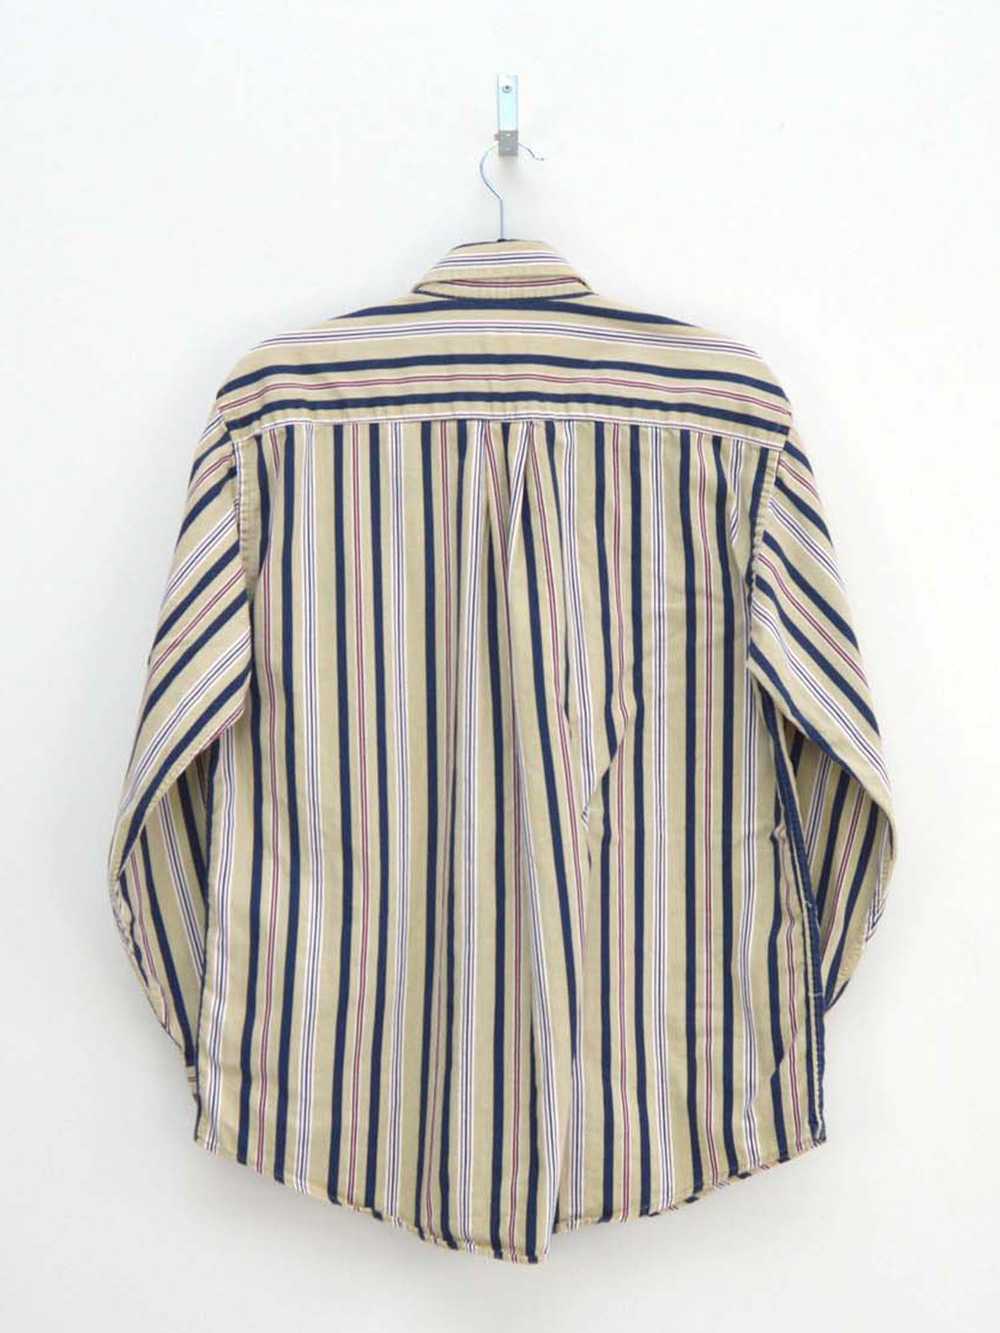 Vintage Beige & Navy Striped Shirt (M) - image 2